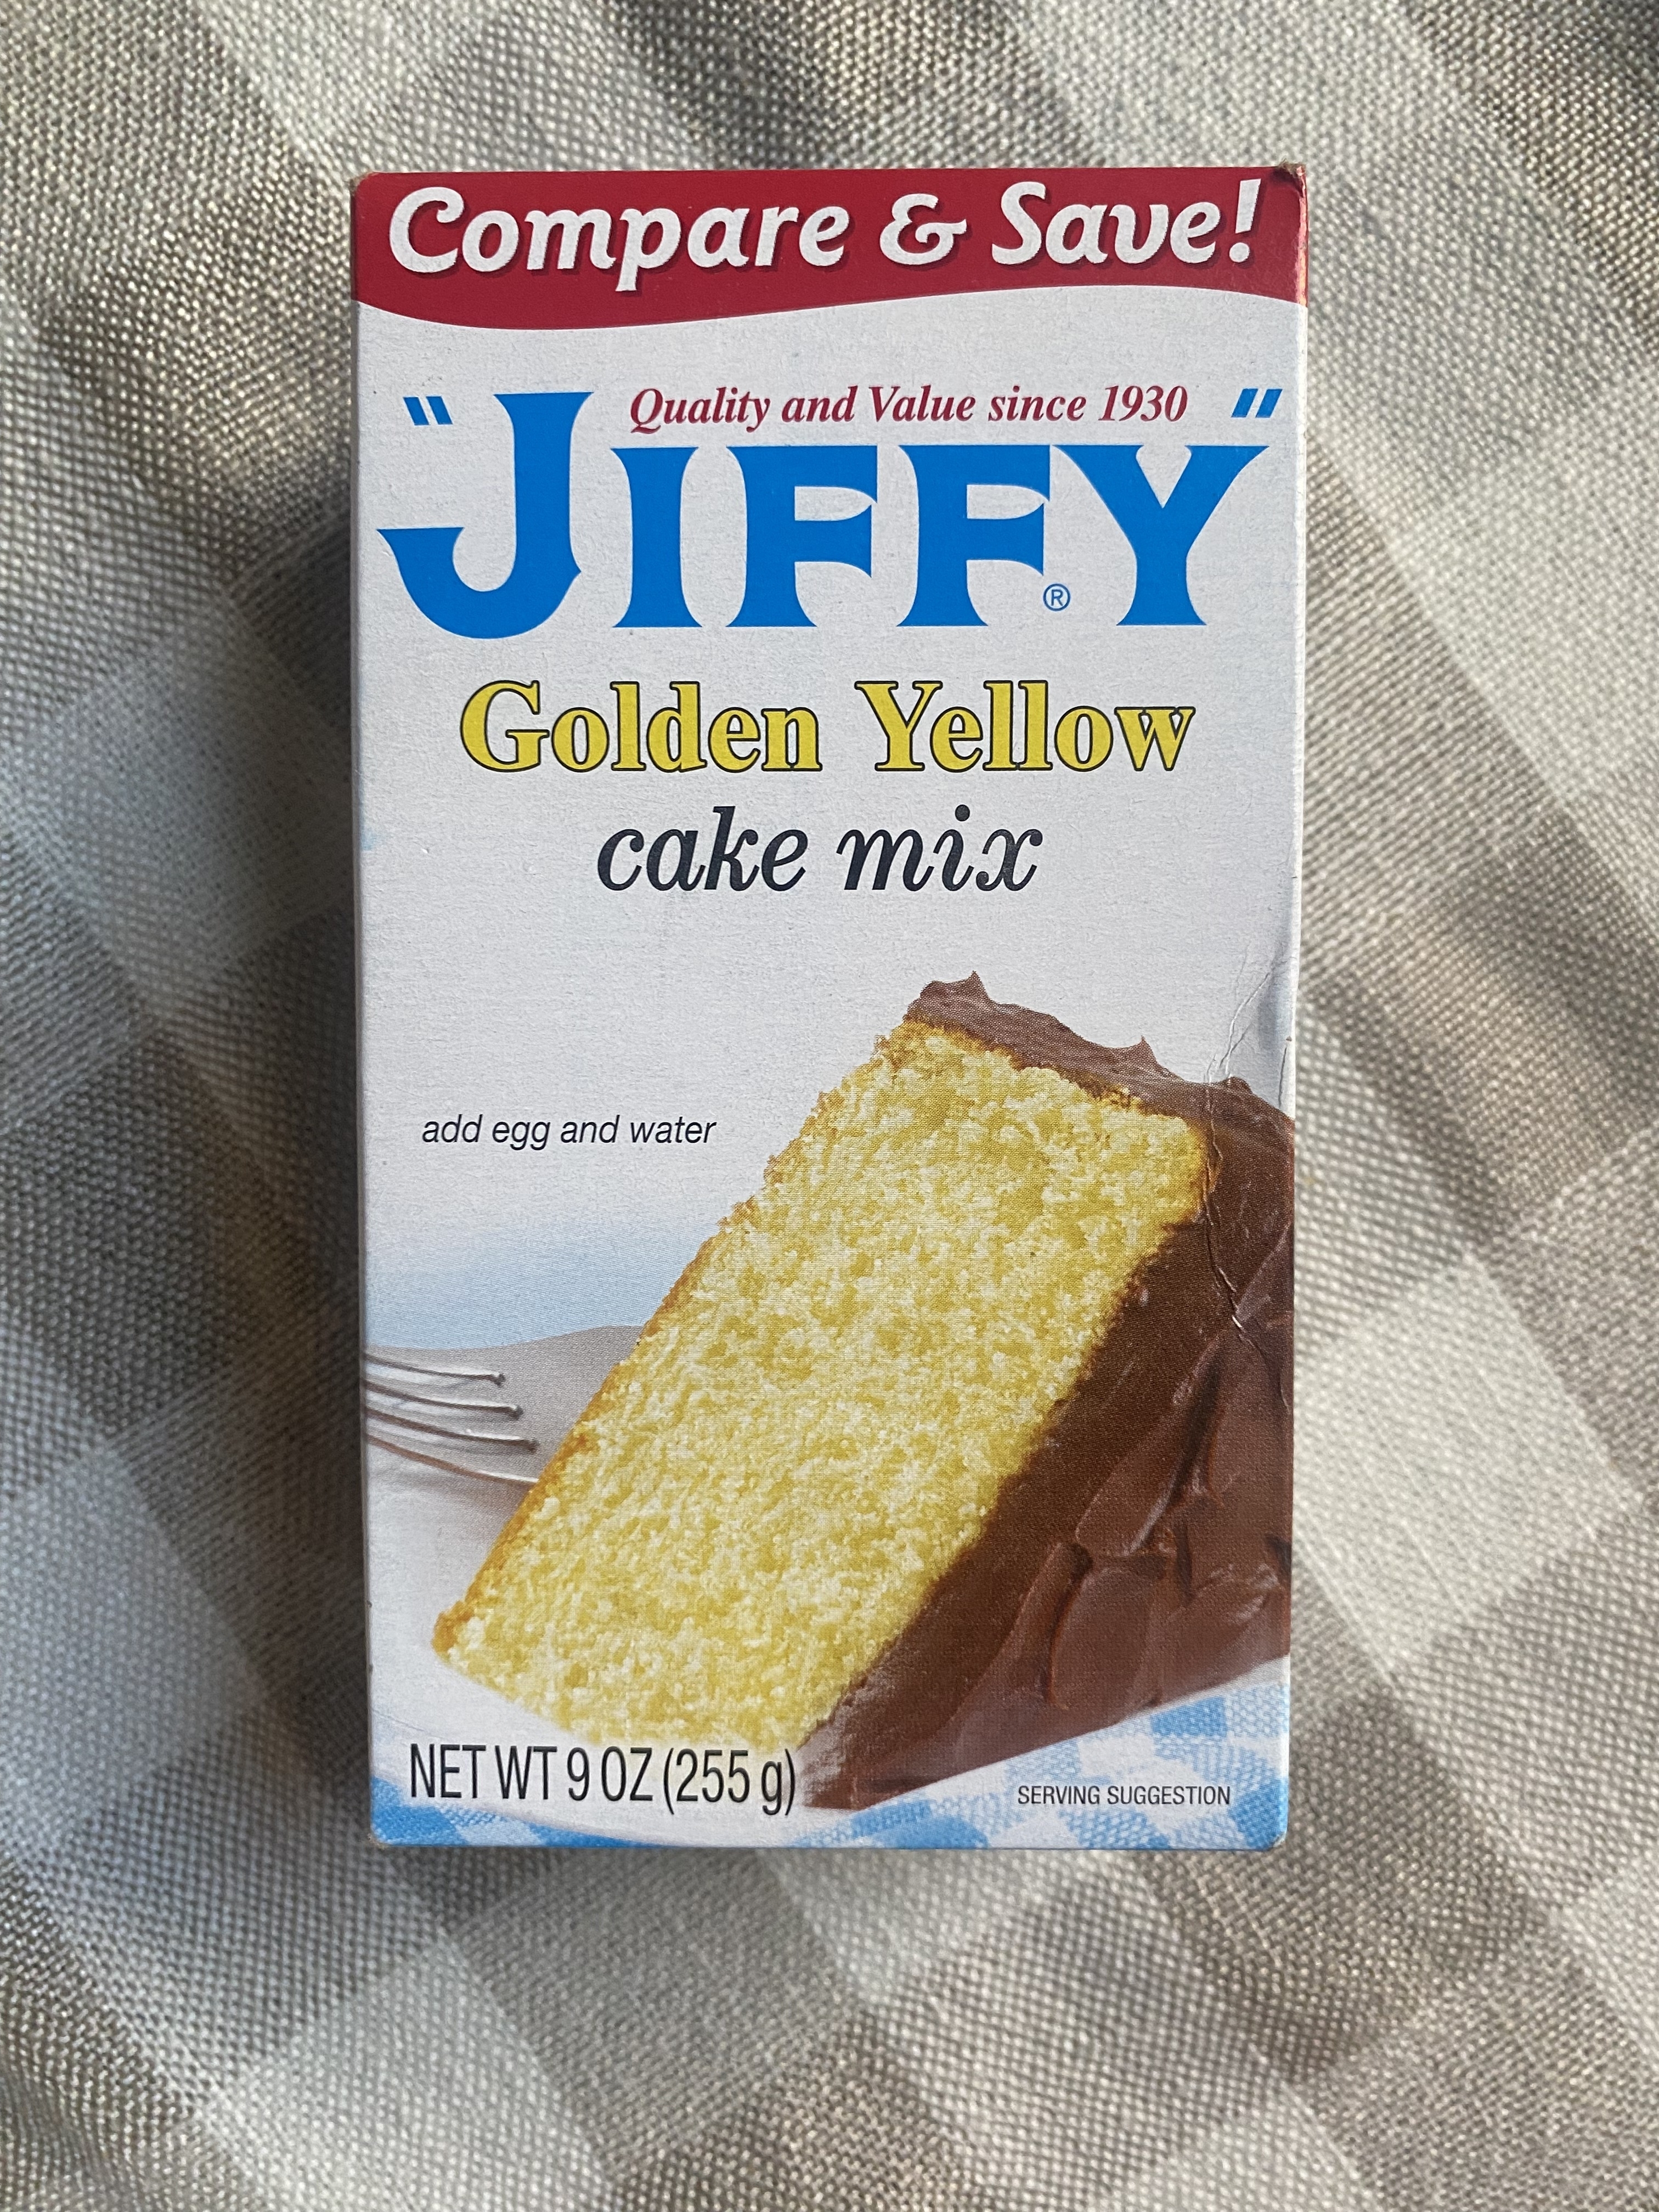 a box of Jiffy Golden Yellow Cake Mix